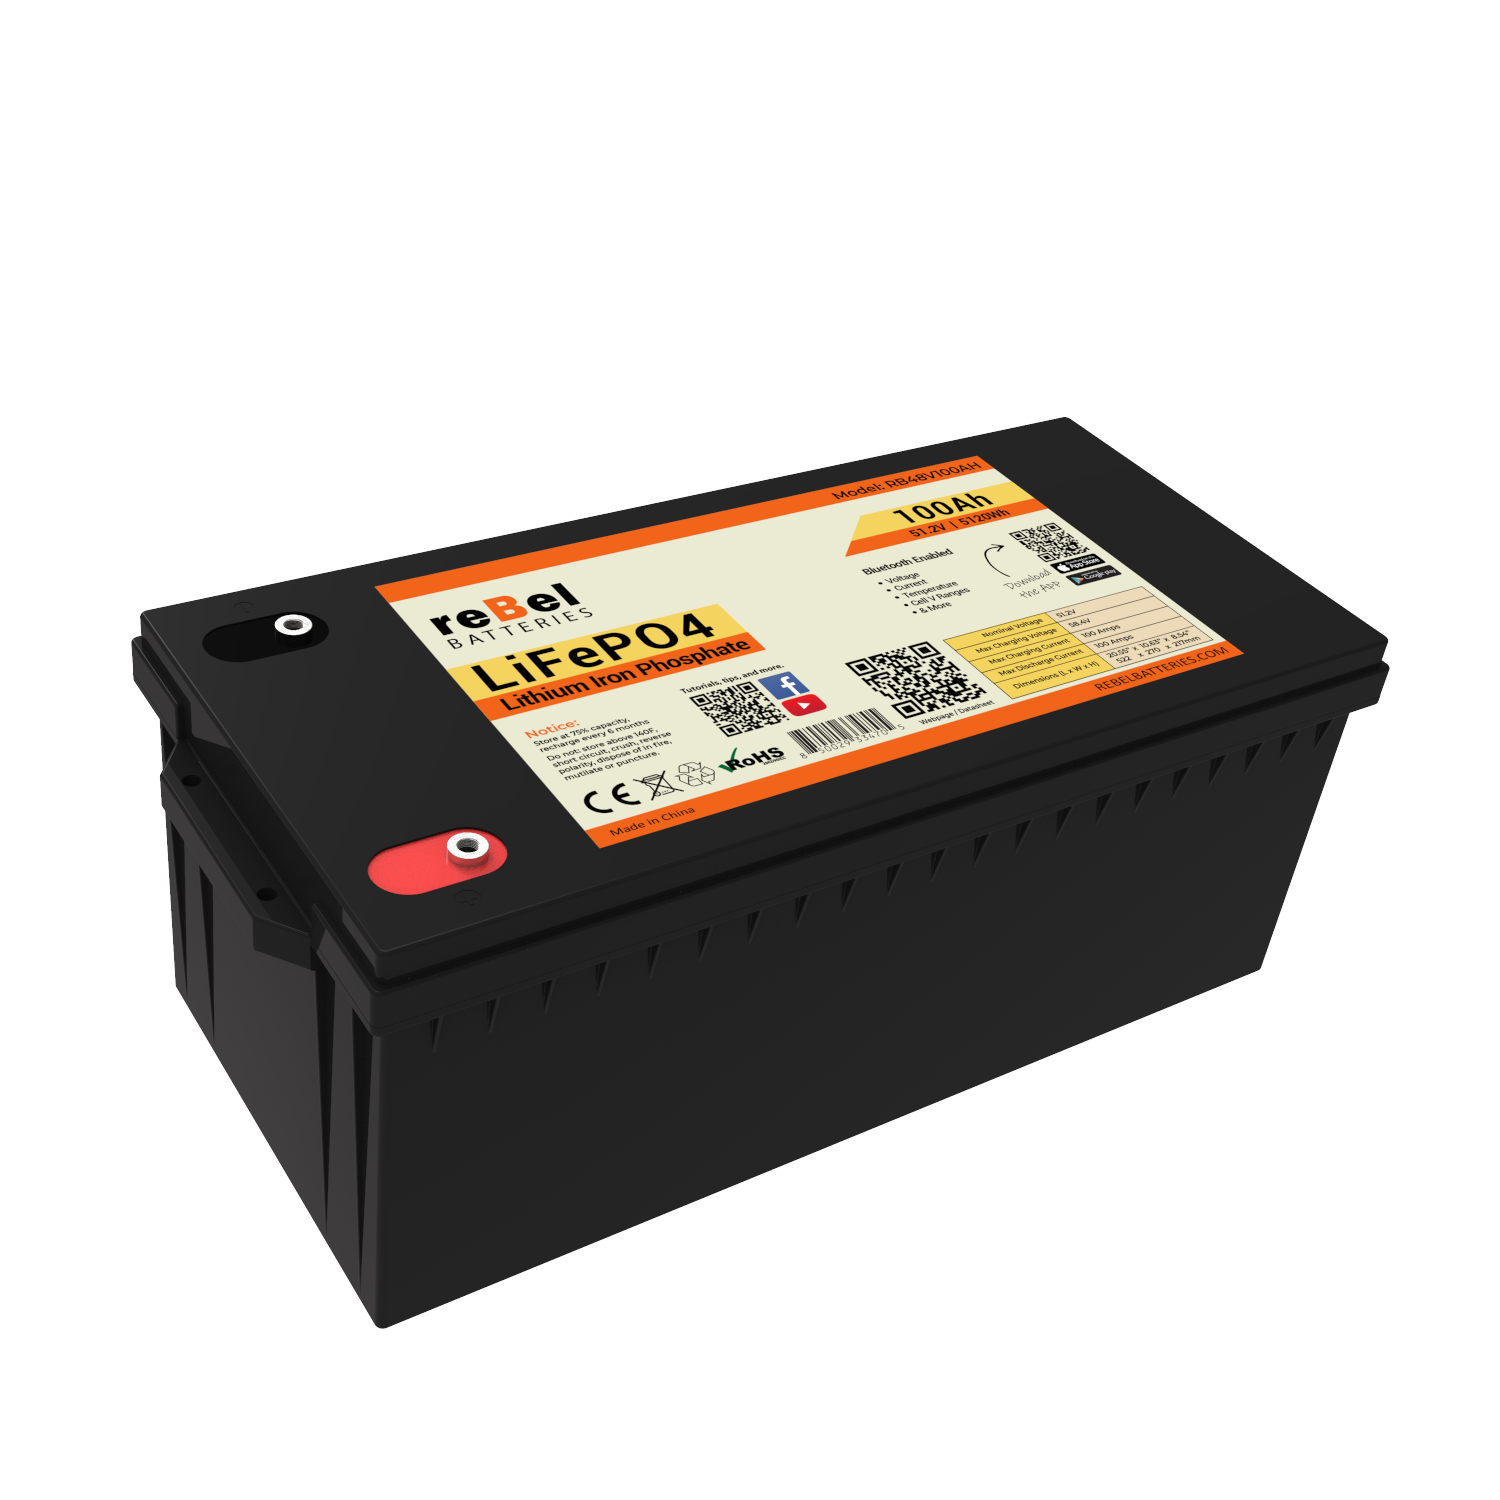 CHINS 100AH Smart 48V LiFePO4 Lithium Bluetooth Battery w/ Built